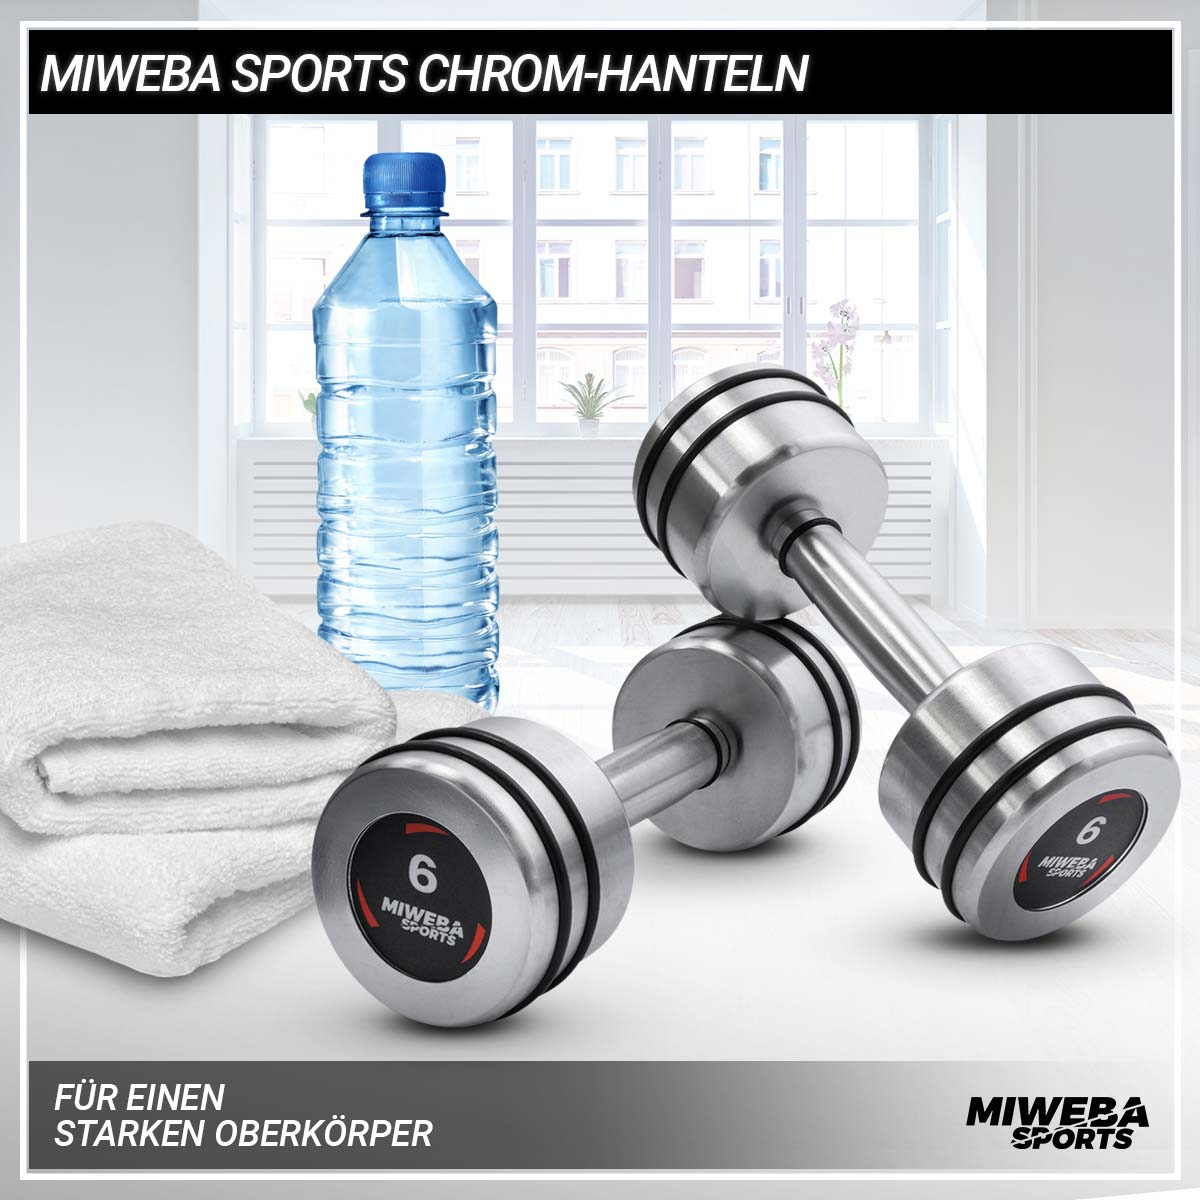 2x Matt silber Chrom Hanteln Kurzhanteln, Fitnesszubehör SPORTS MIWEBA kg 6.0